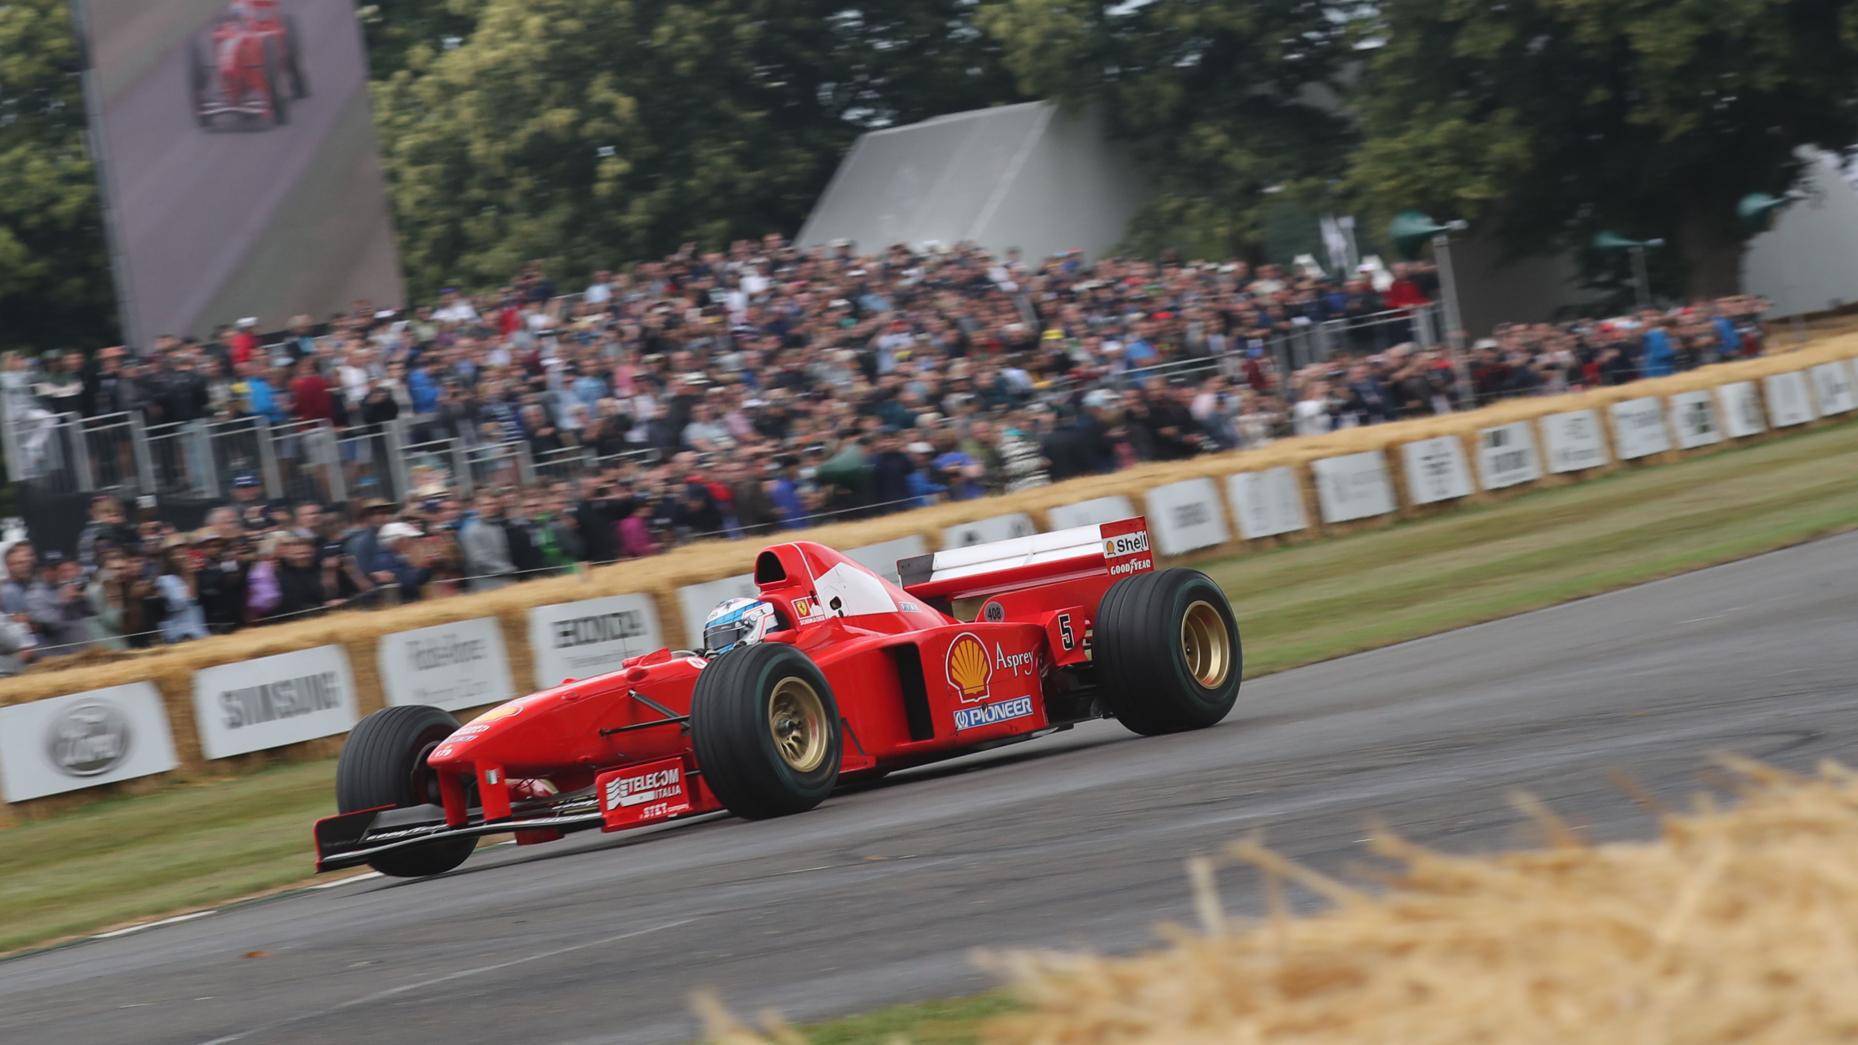 7. A Michael Schumacher Ferrari F1 car